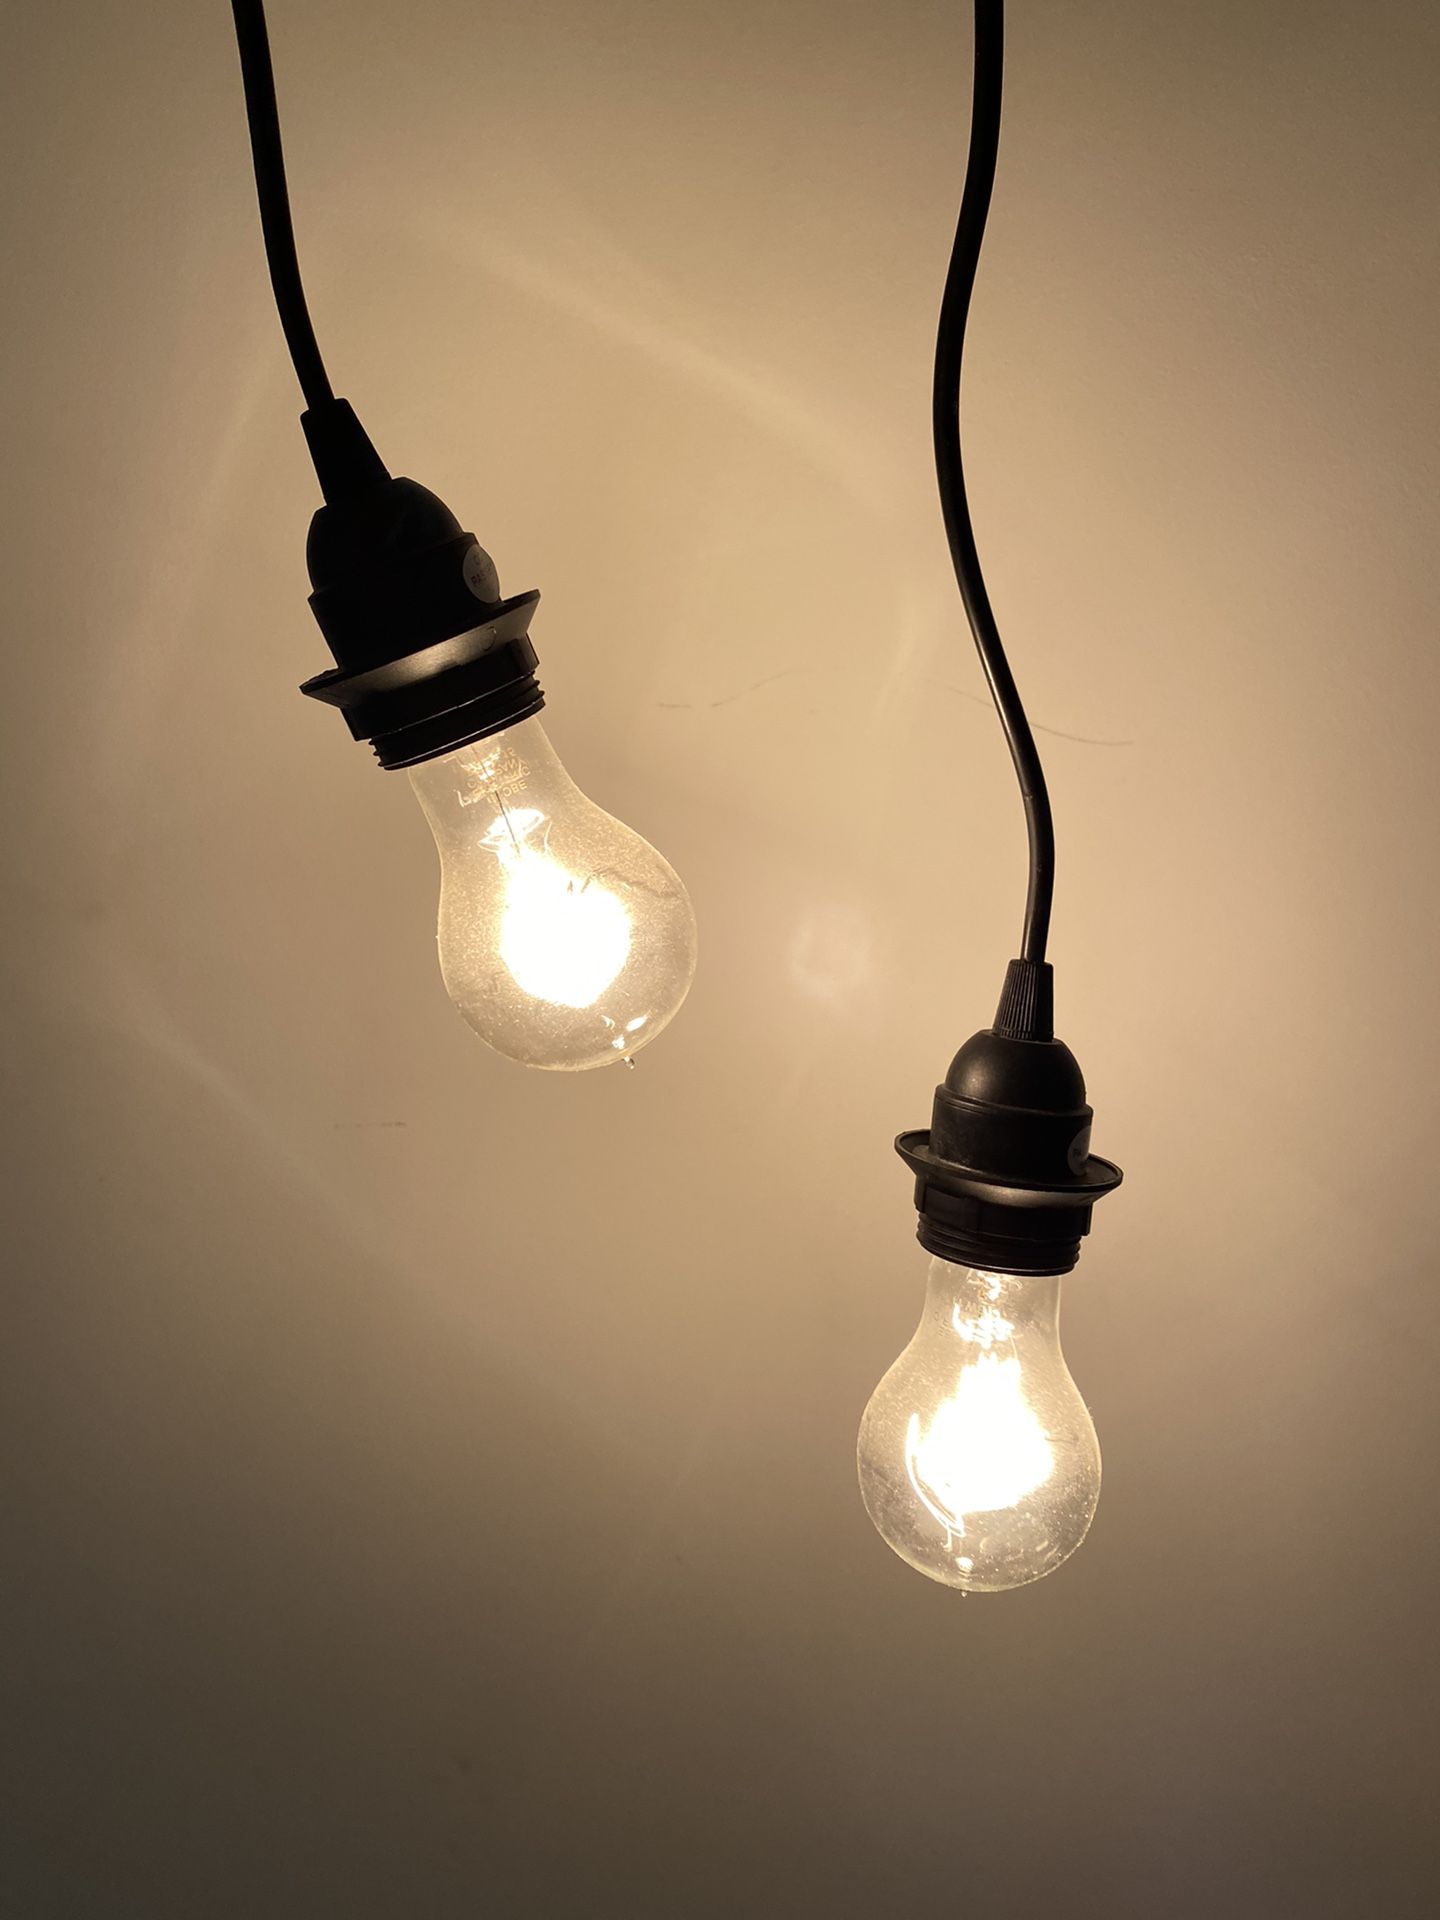 Light cords and vintage bulbs